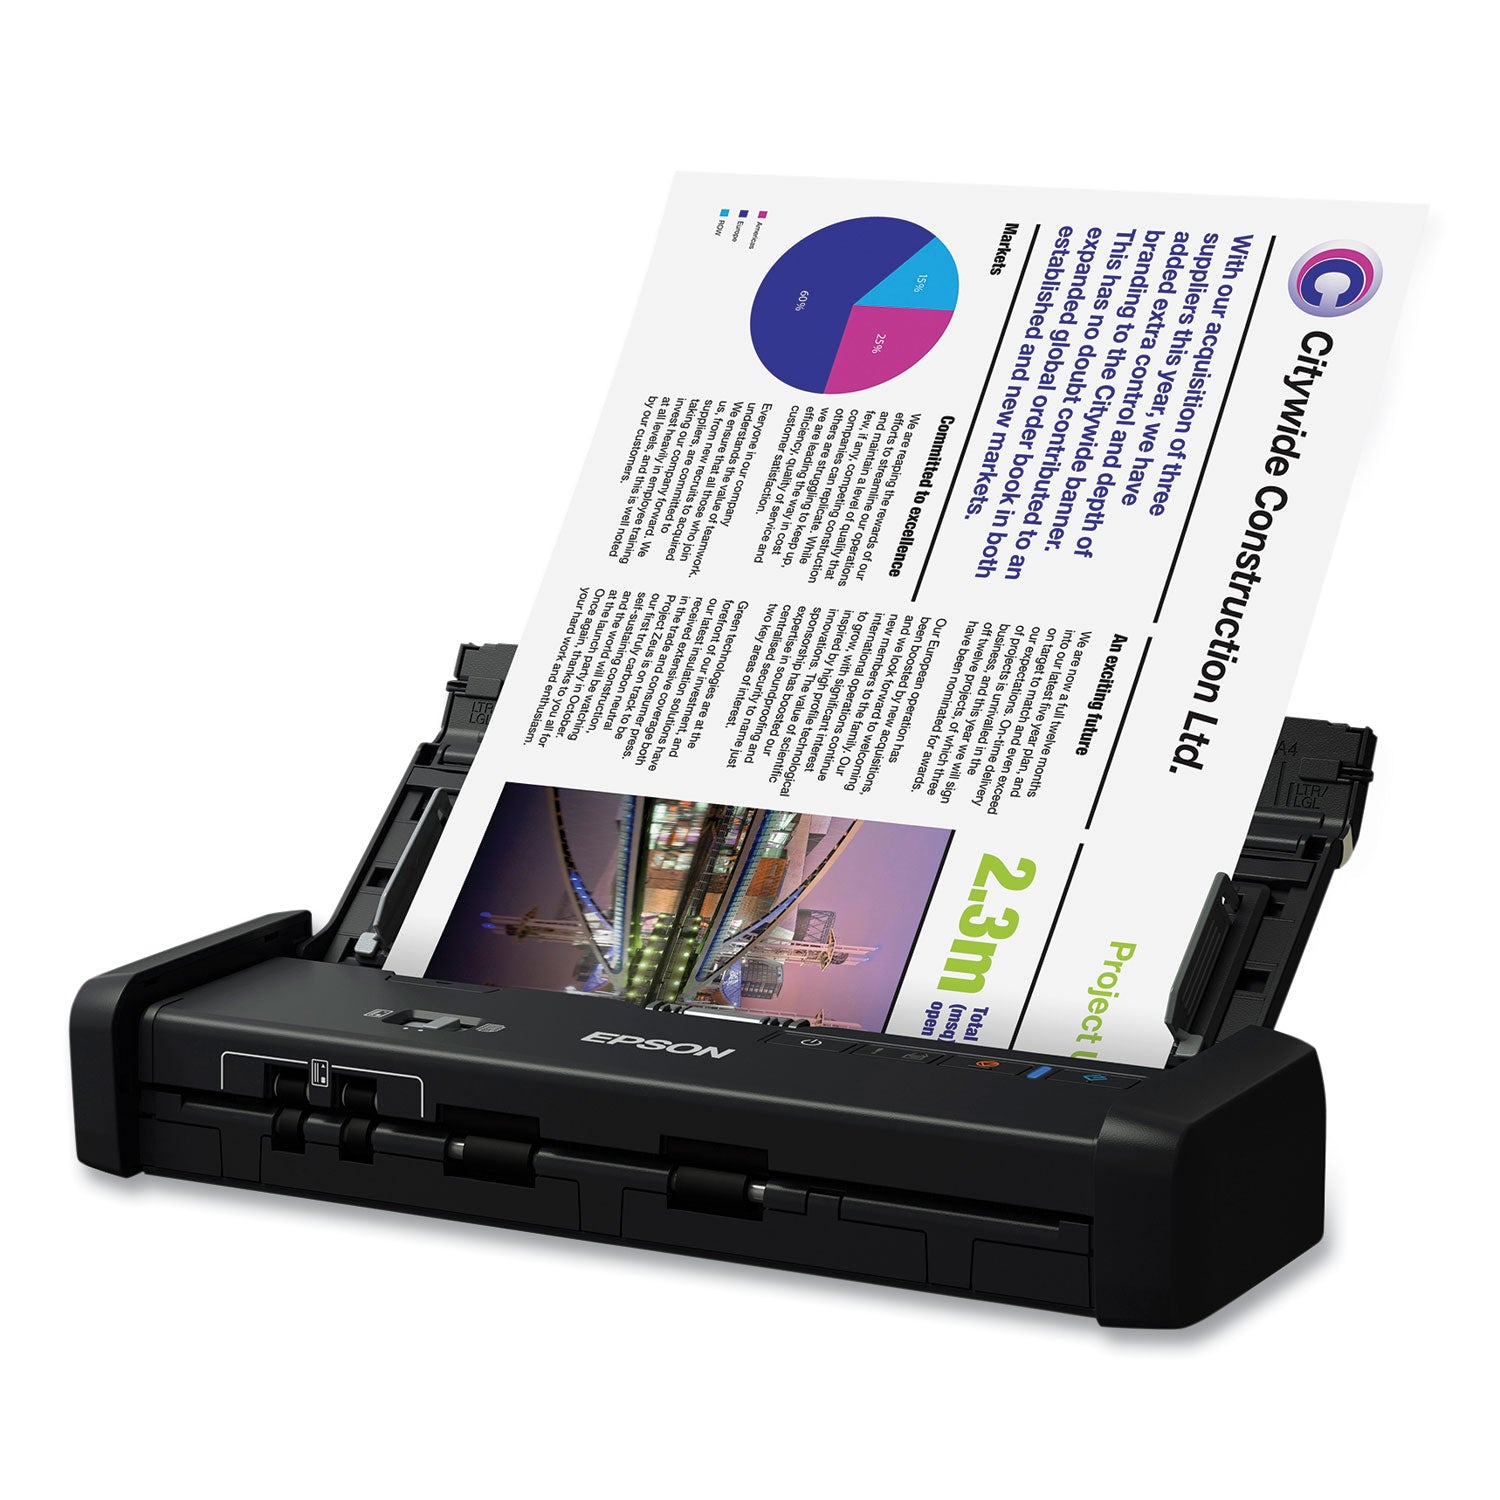 ds-320-portable-duplex-document-scanner-1200-dpi-optical-resolution-20-sheet-duplex-auto-document-feeder_epsb11b243201 - 5